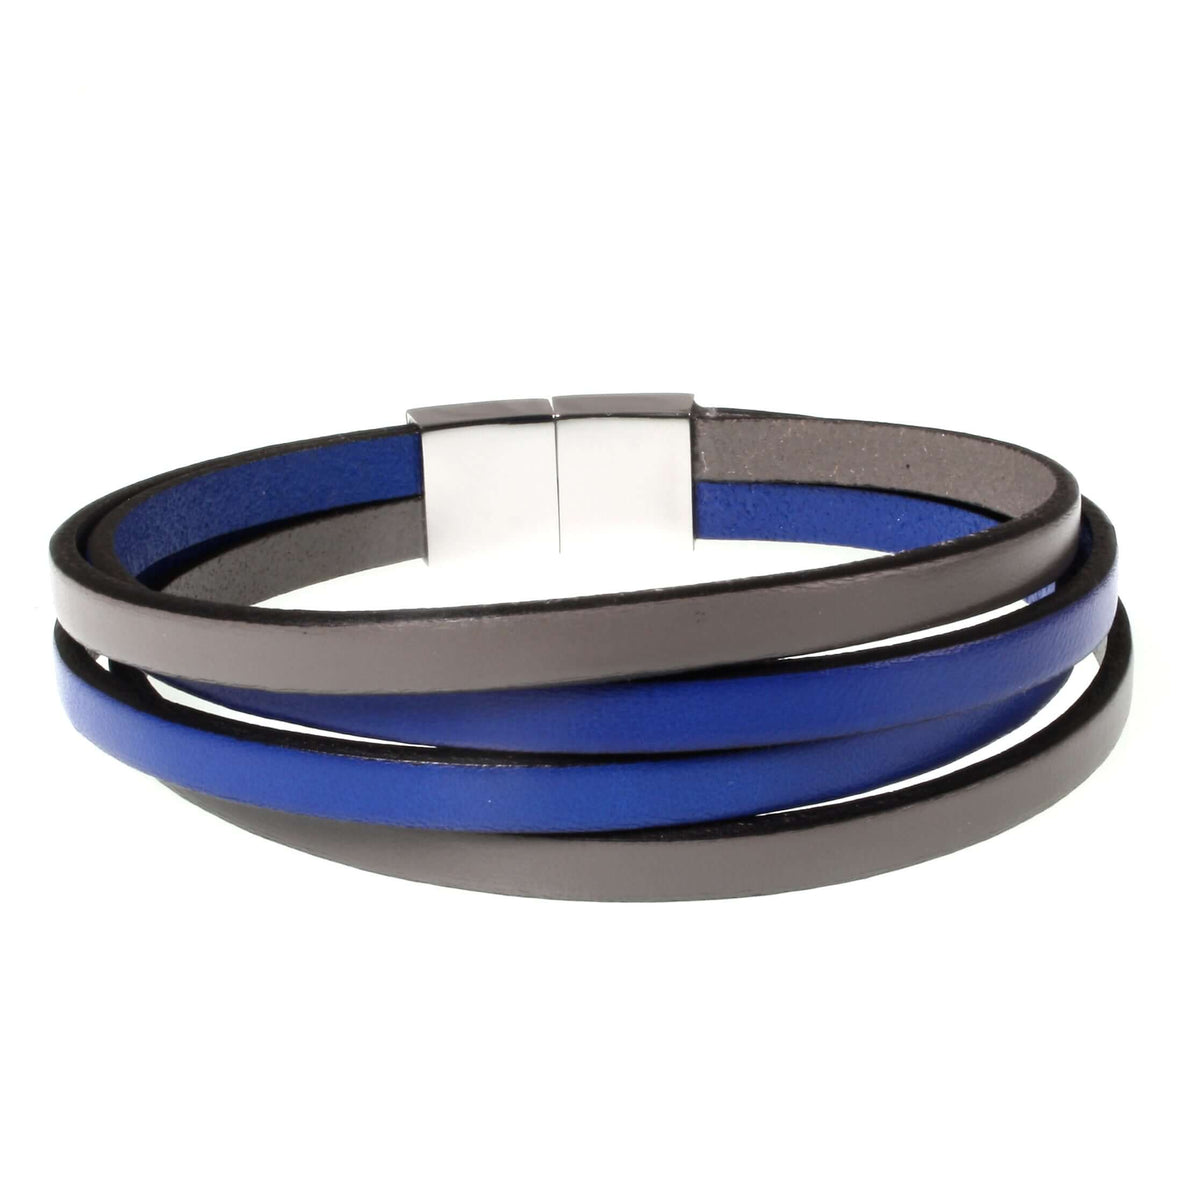 Herren-Leder-Armband-Twist-grau-blau-flach-Edelstahlverschluss-hinten-wavepirate-shop